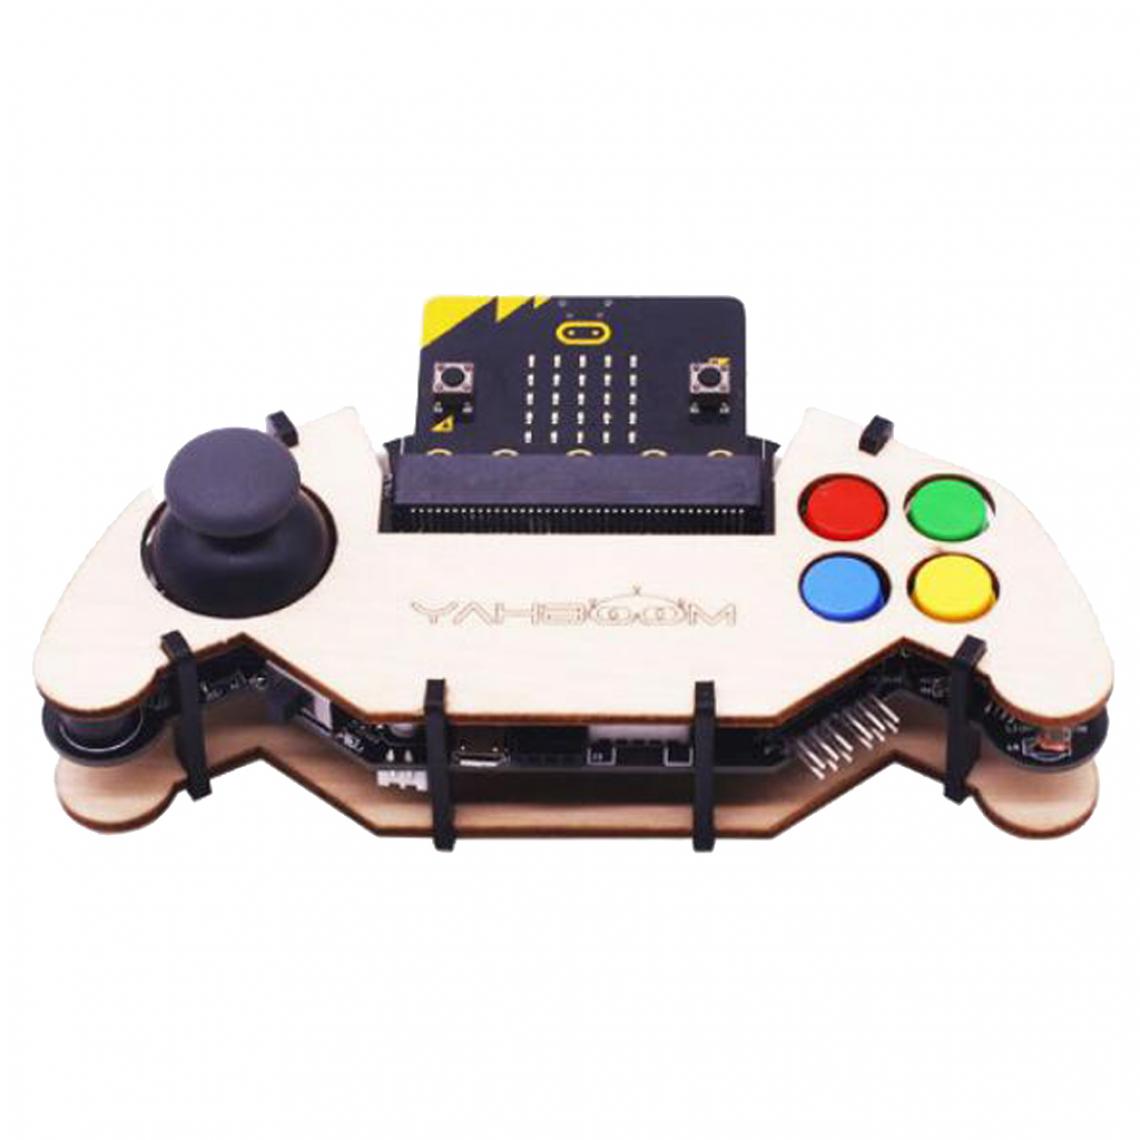 marque generique - joystick gamepad board gamepad séparé (sans microbit) - Ampli